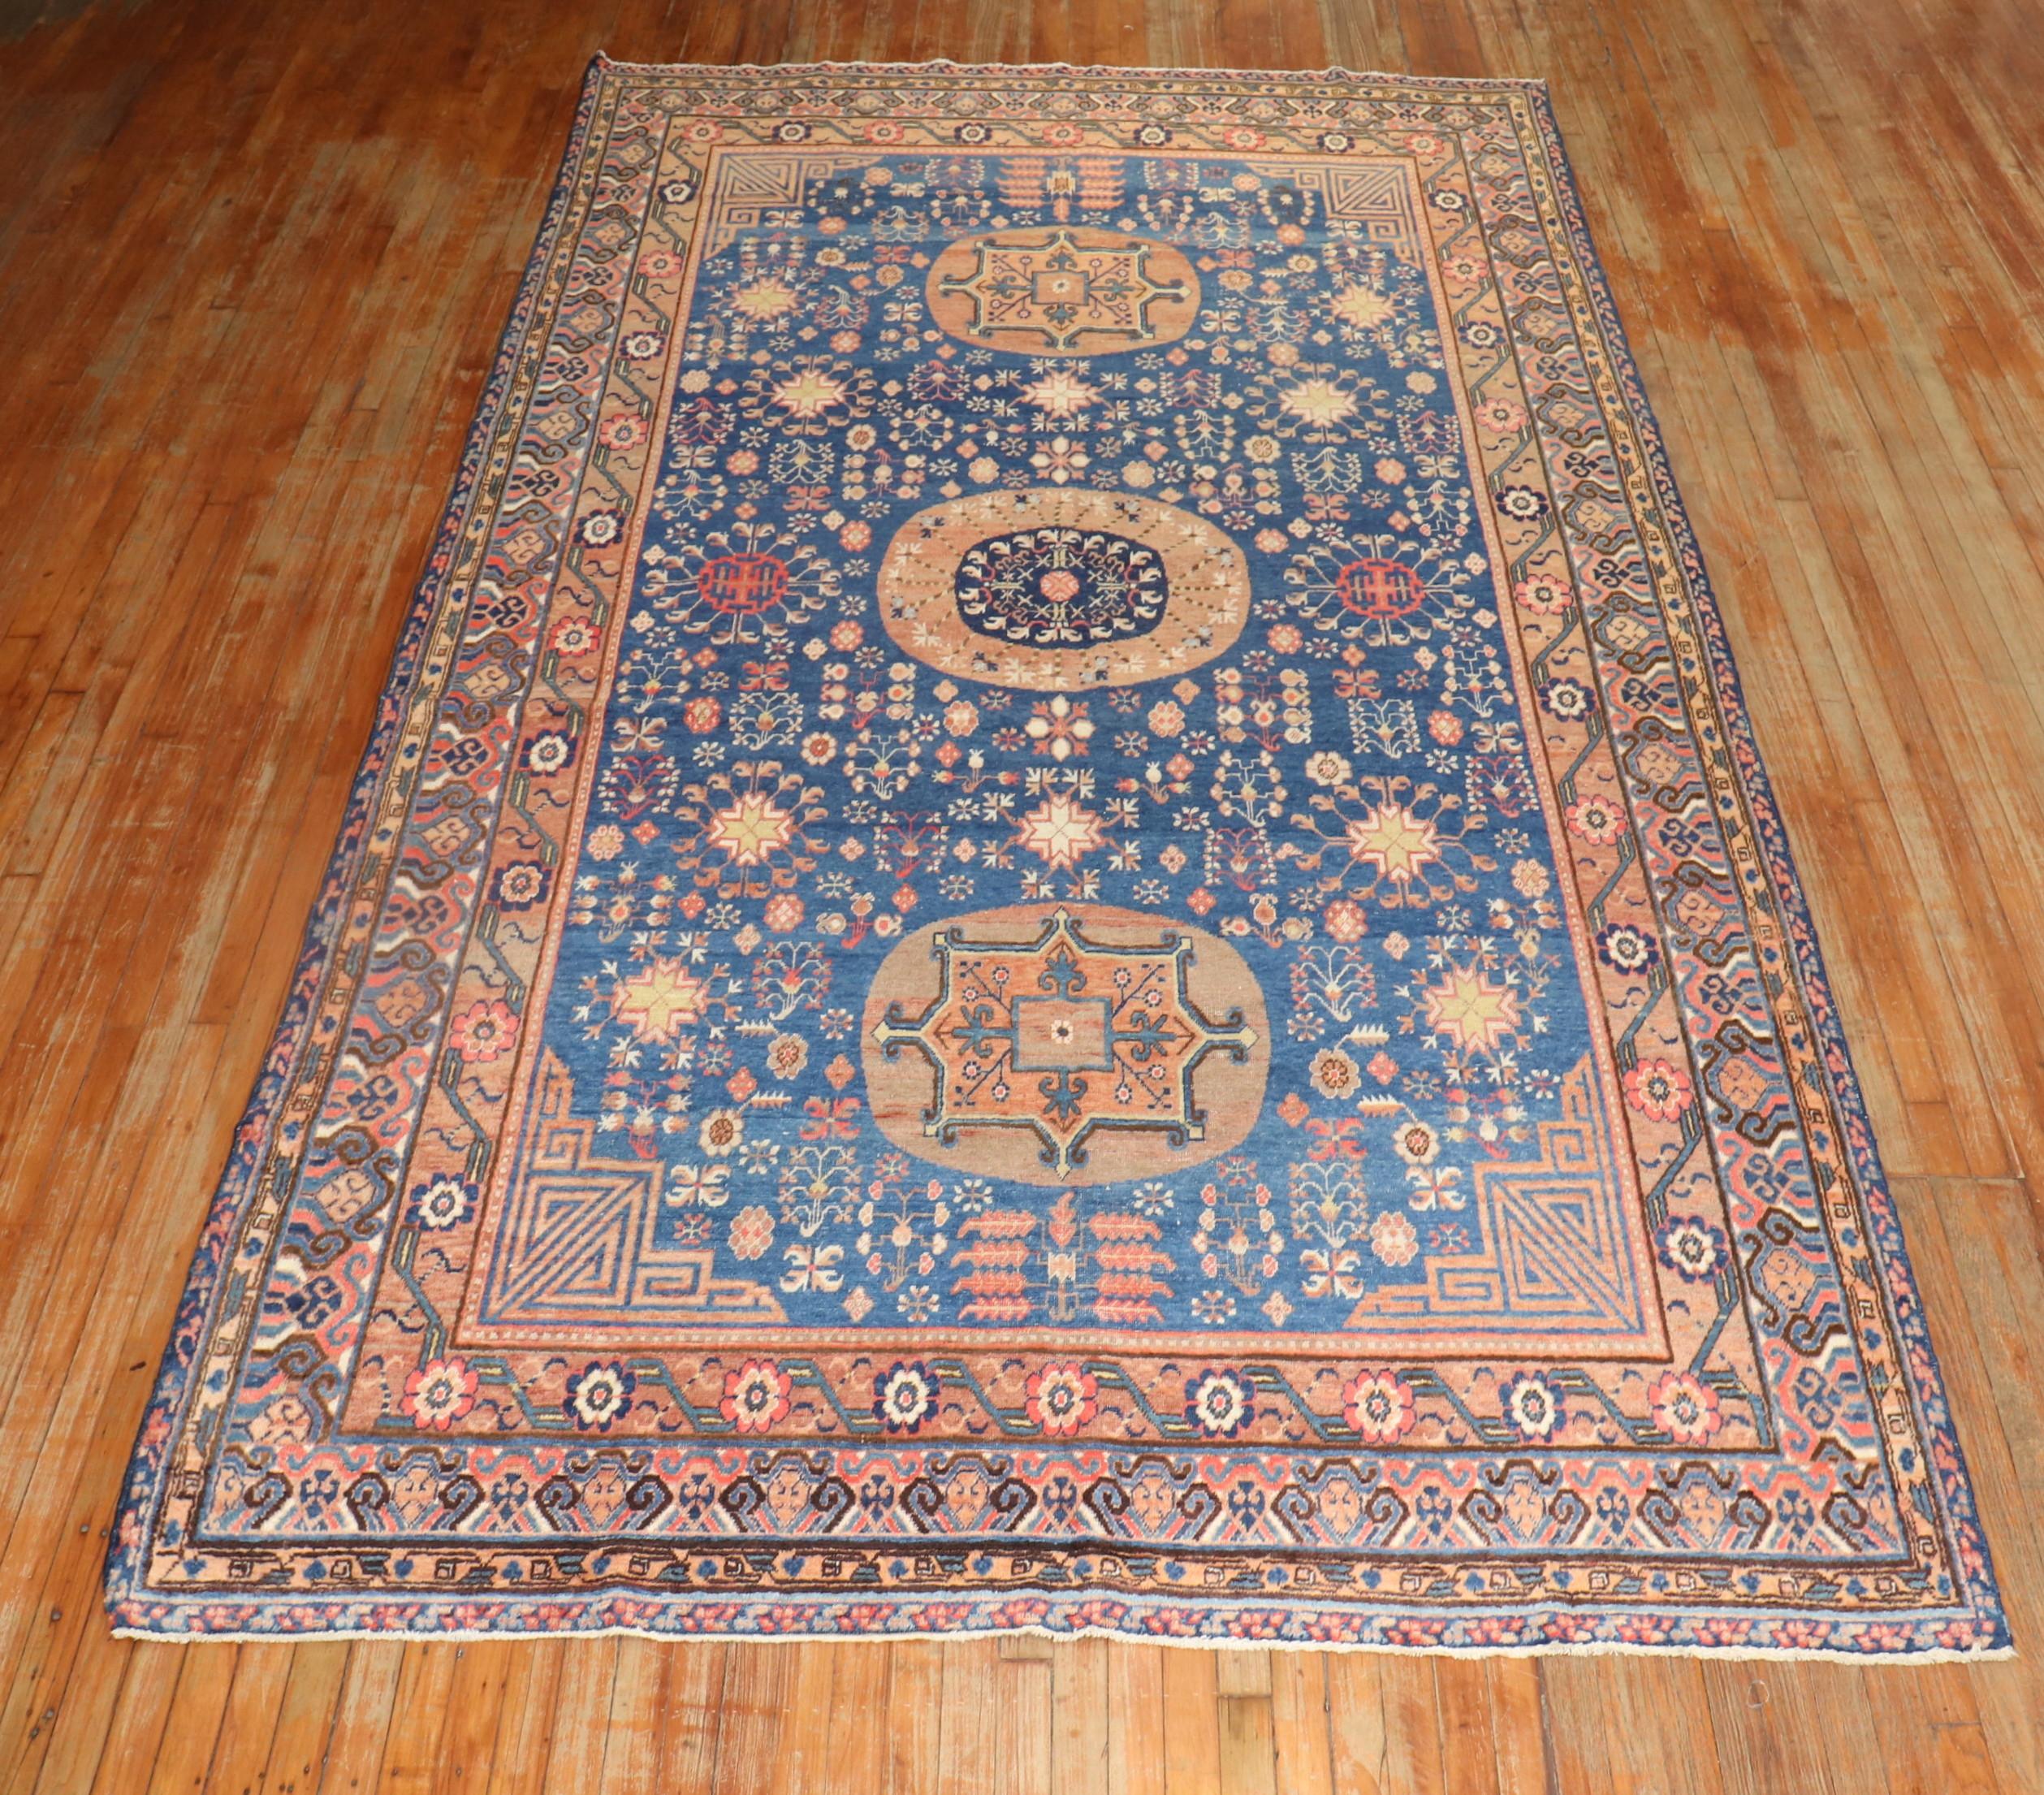 Early 20th Century Blue Color Antique Khotan Gallery size rug

Details
rug no.	j2674
size	6' 10